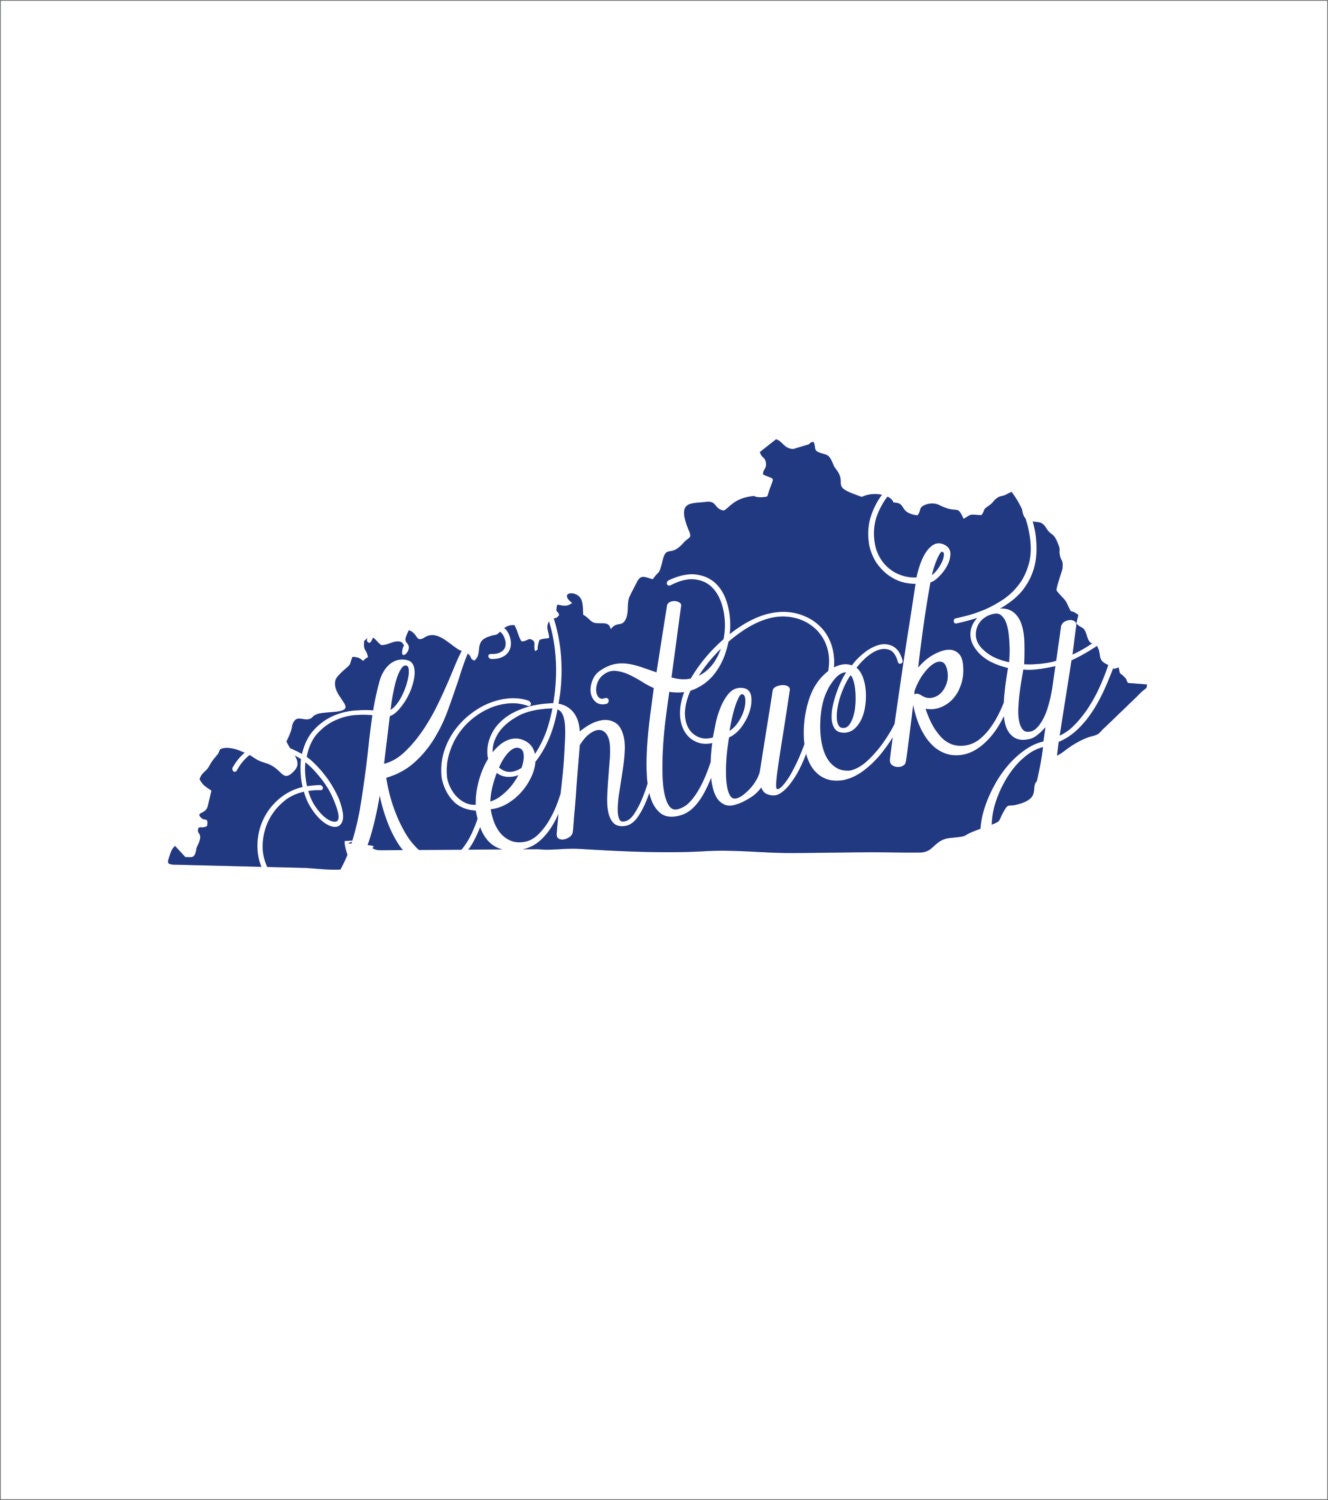 Download KY Kentucky fancy font state silhouette instant digital